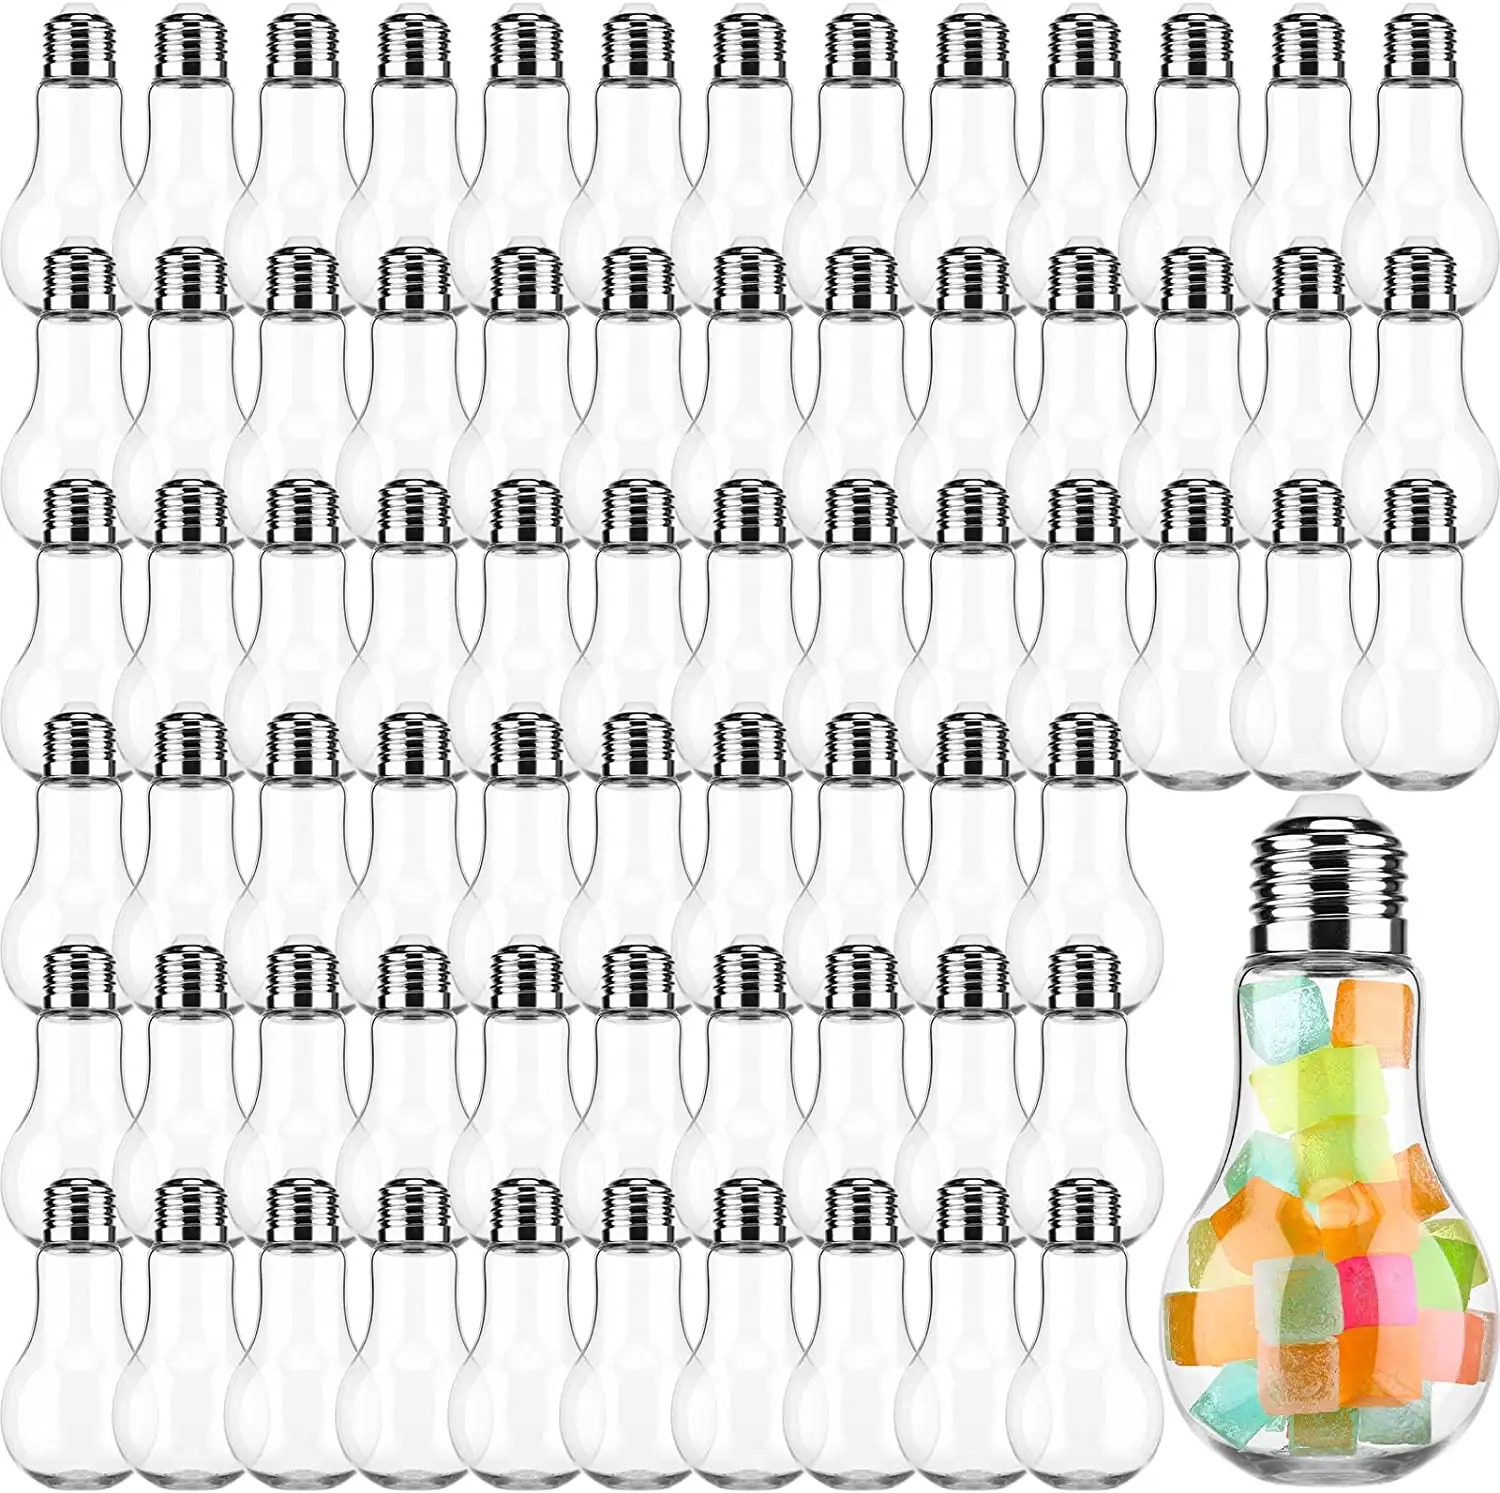 custom standard3.4oz transparent plastic empty round bulb shaped necked shape beverage drink bottle party cups jar for drinks